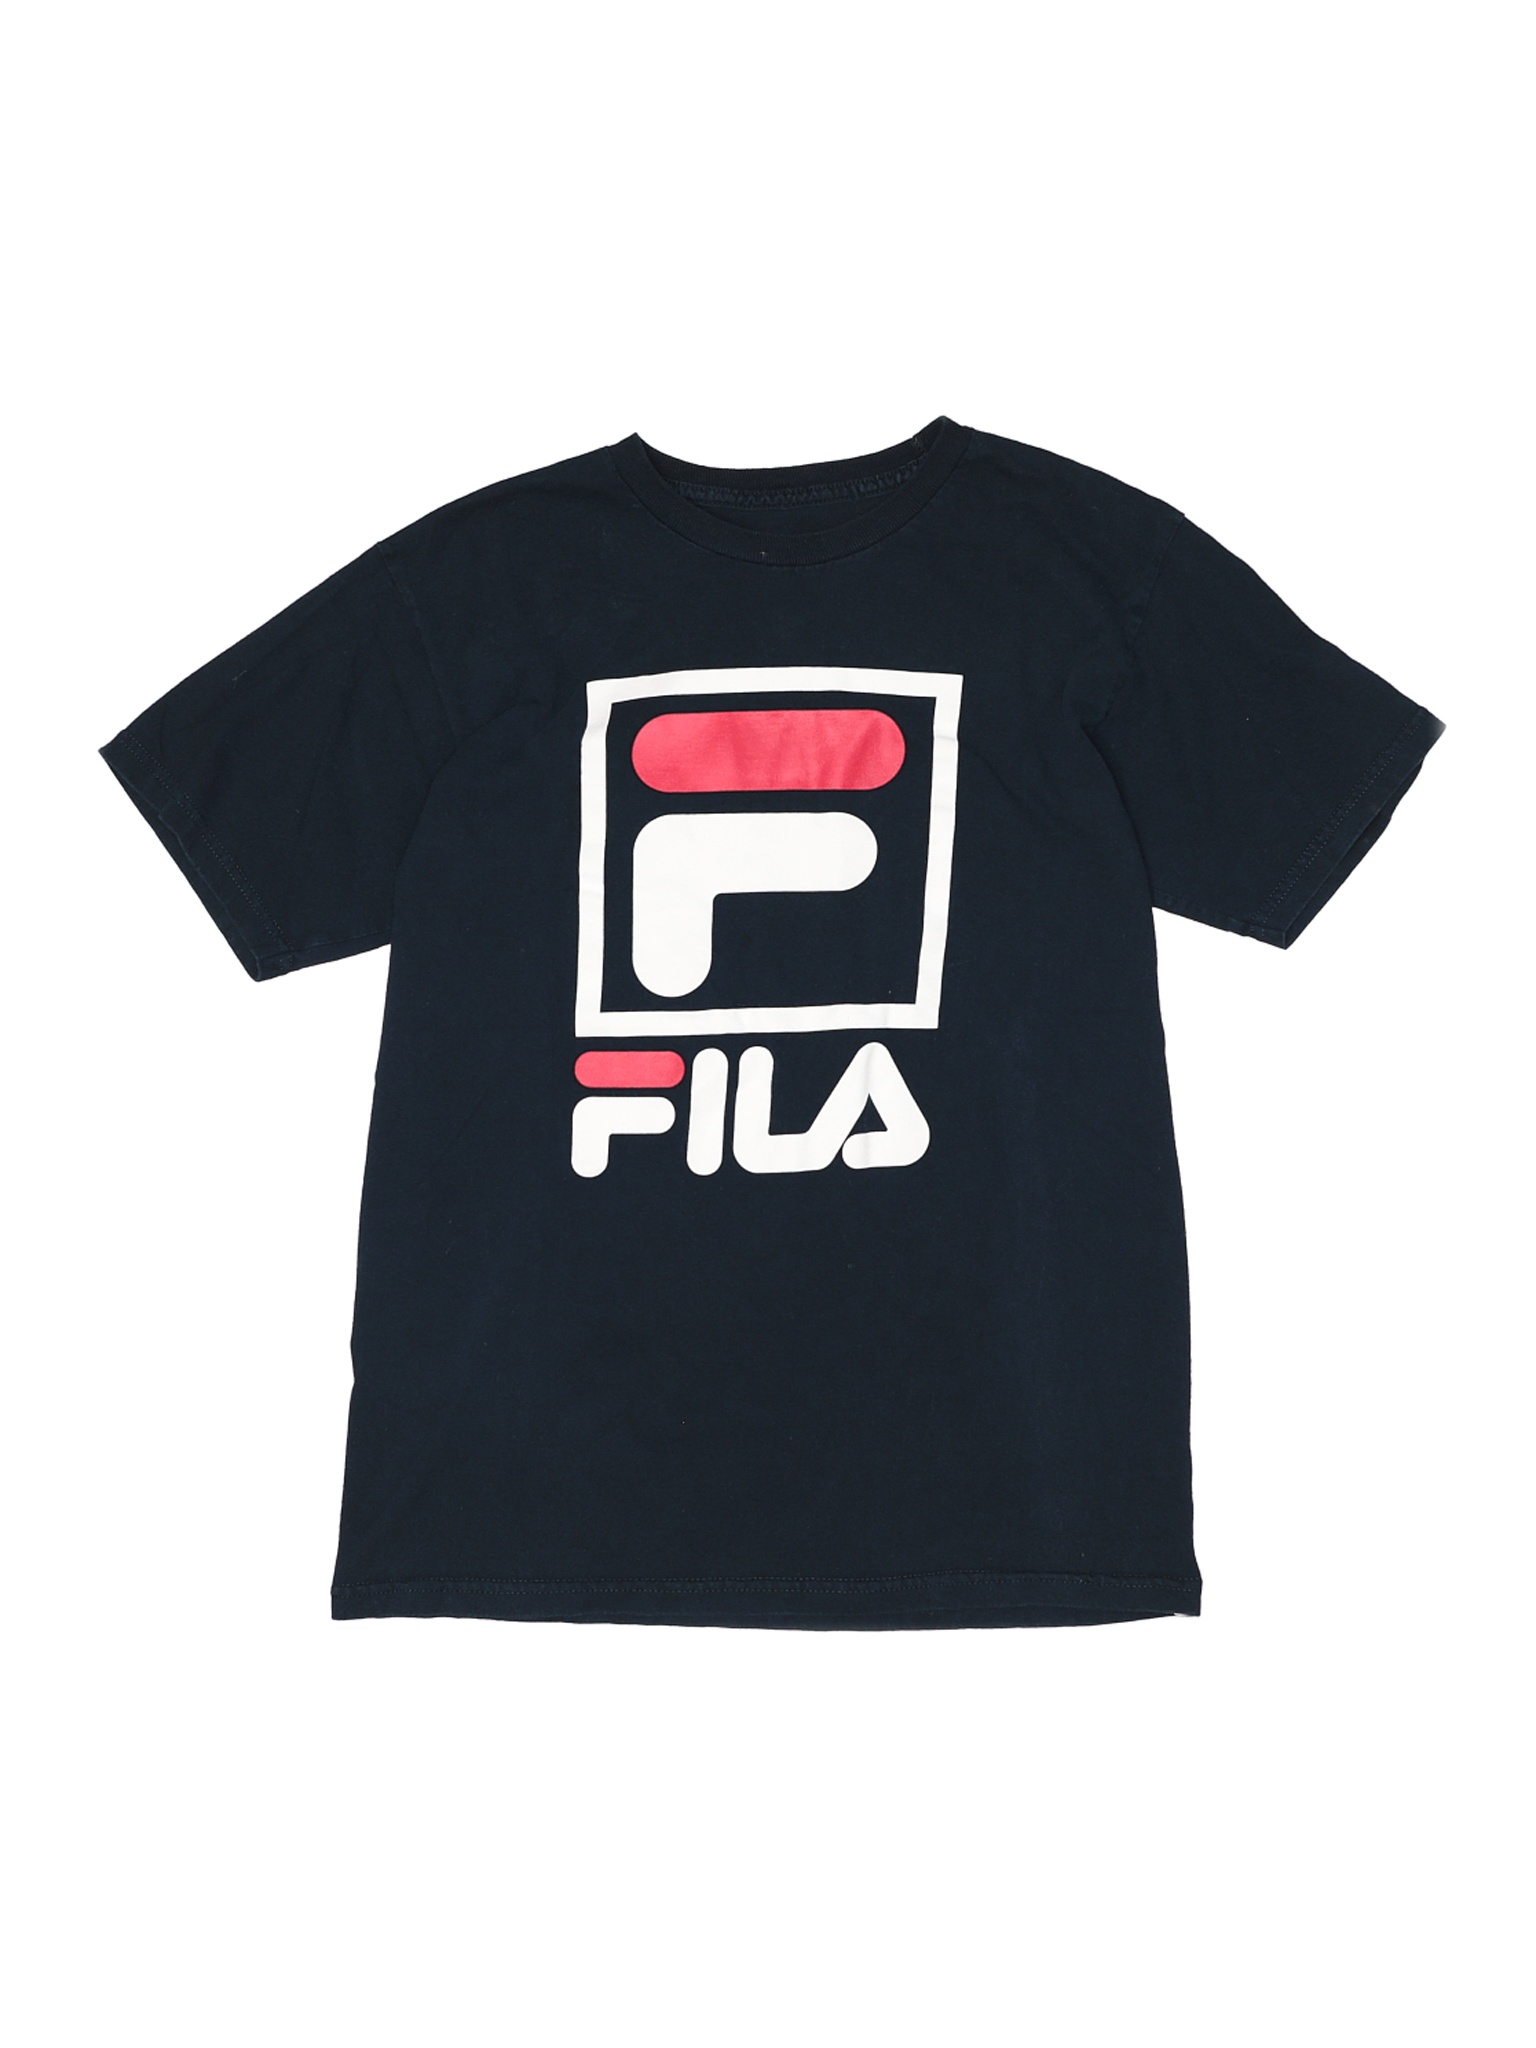 Fila Boys Black Short Sleeve T-Shirt Small kids | eBay